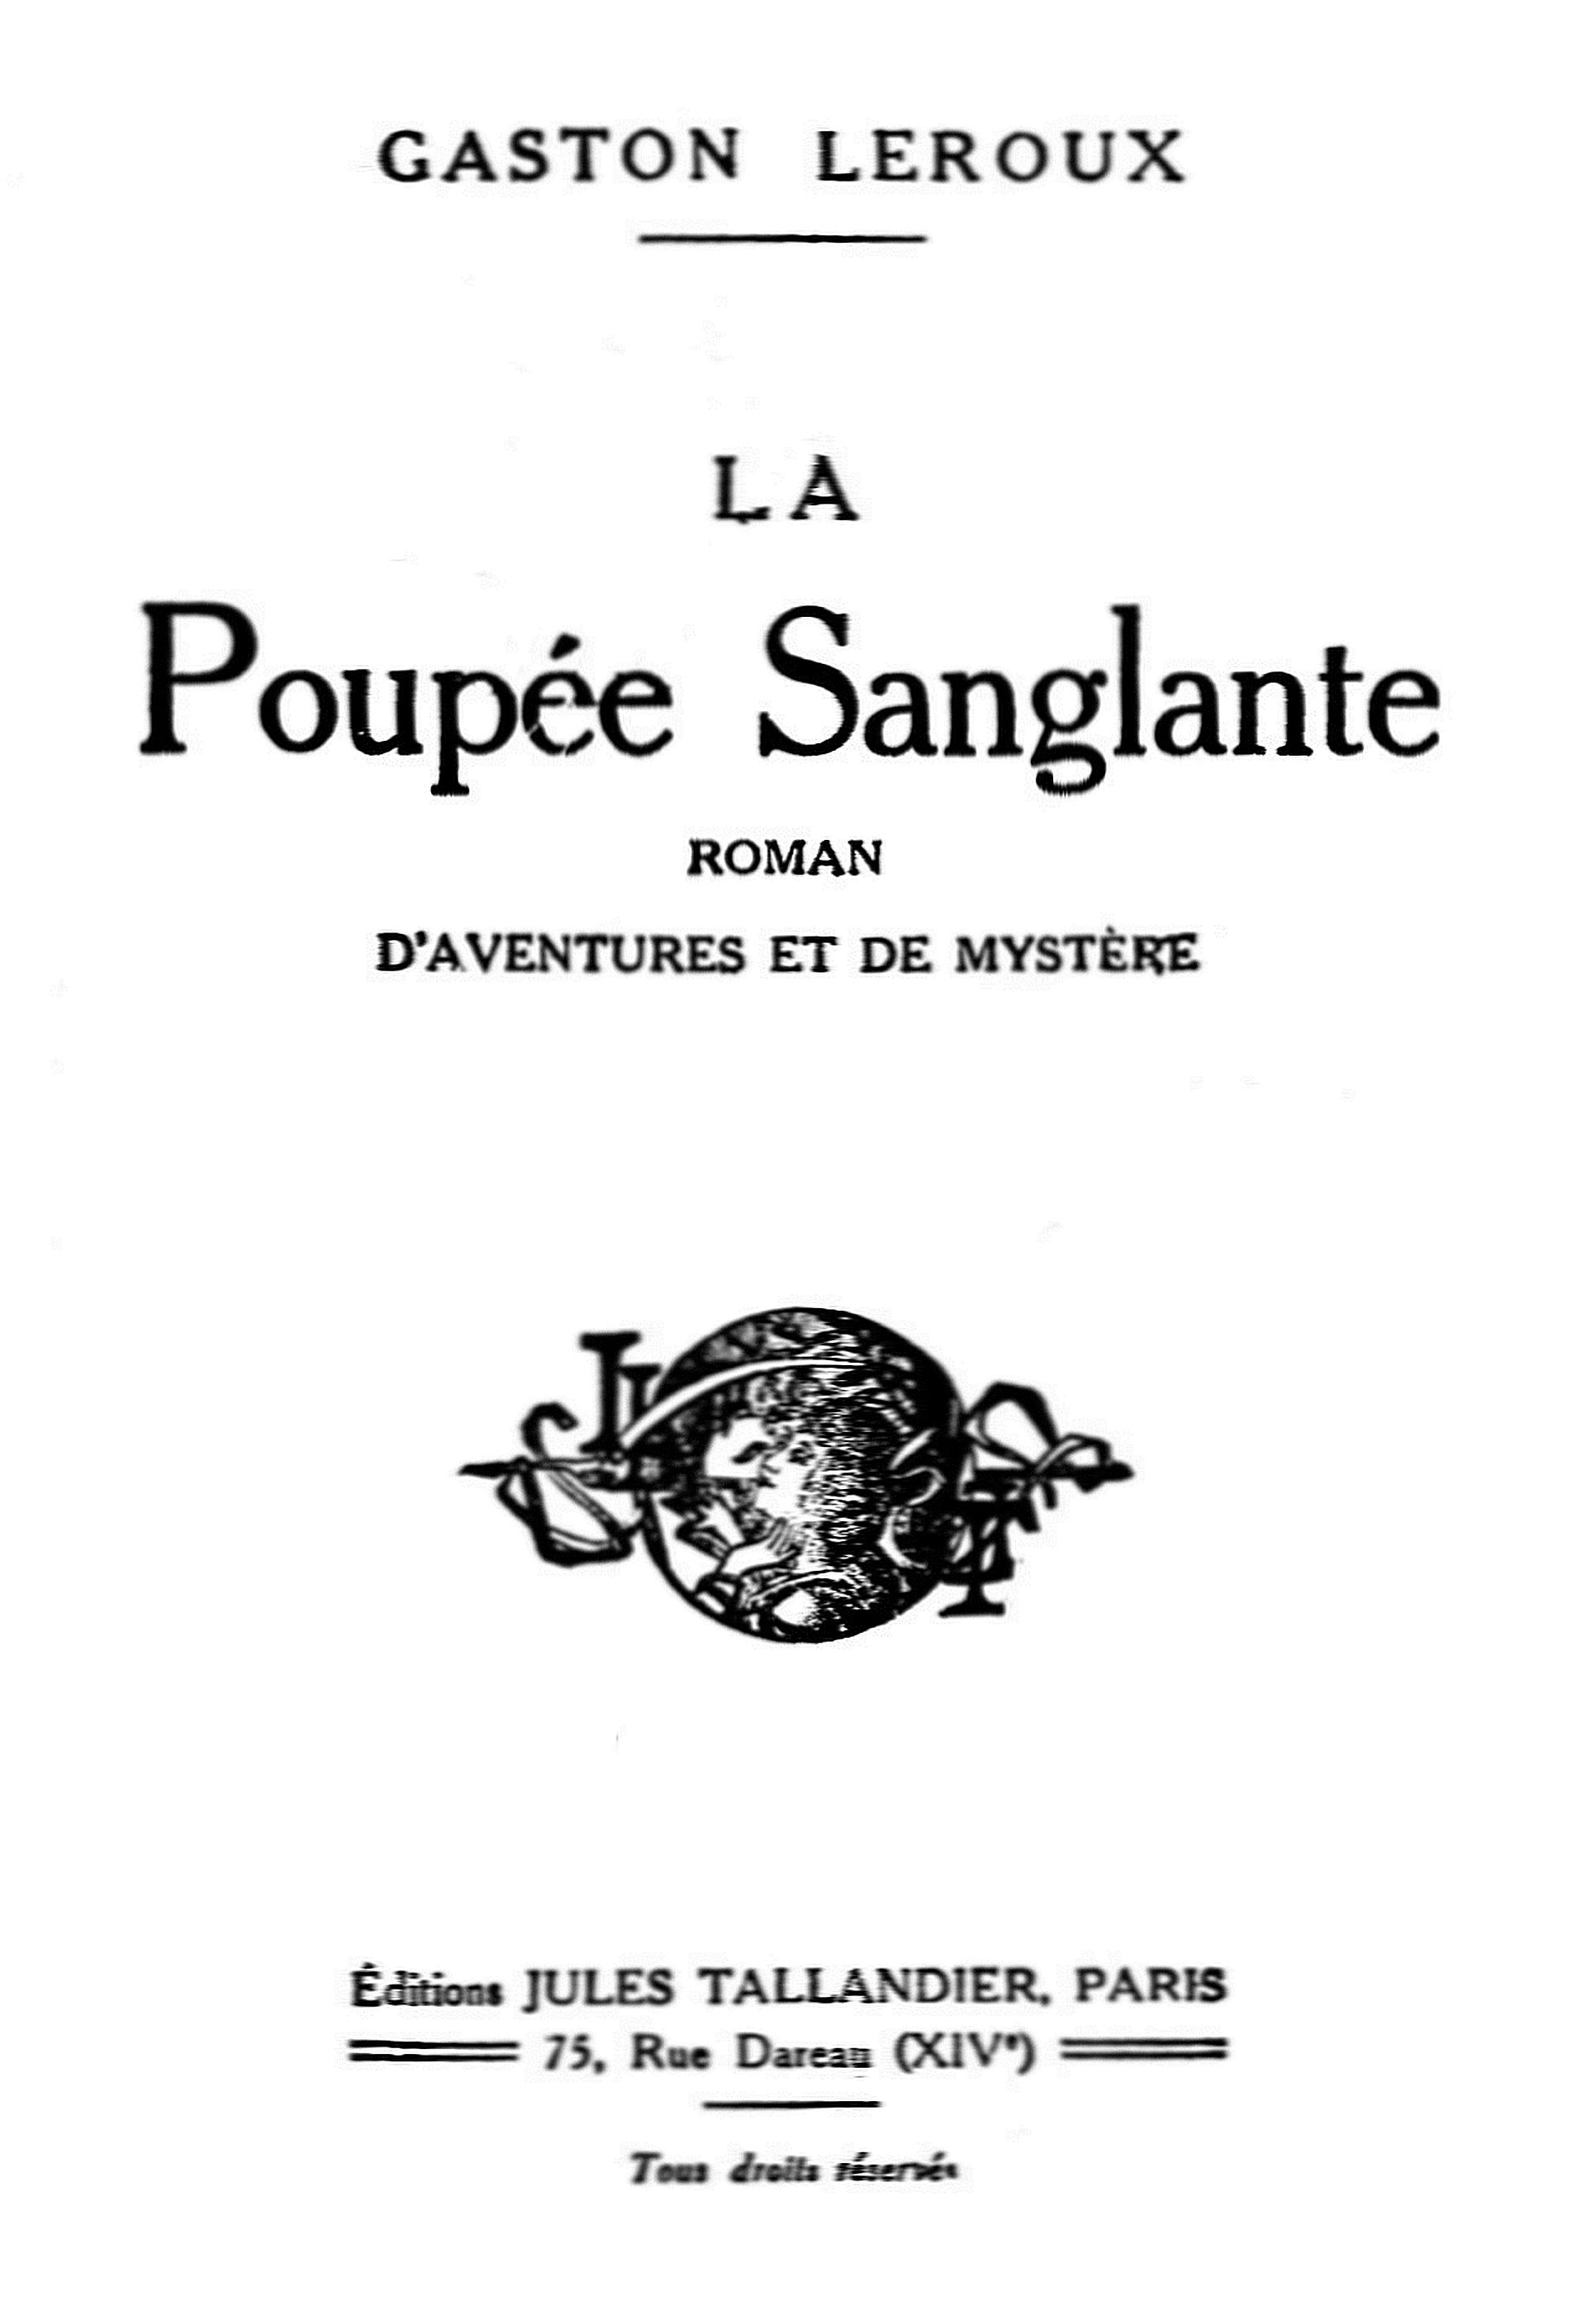 The Project Gutenberg eBook of La Poupée Sanglante, by Gaston Leroux.